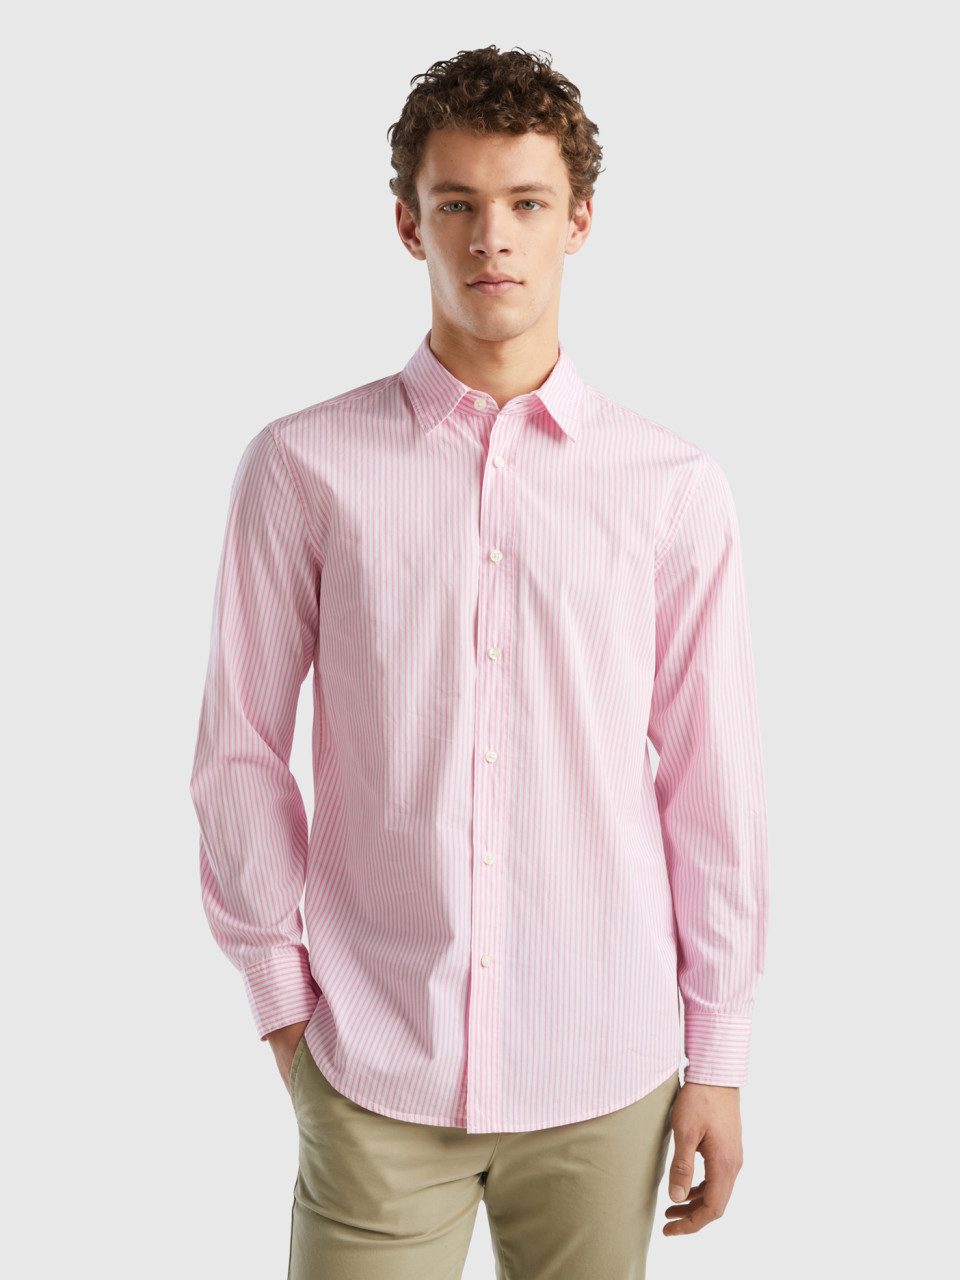 Benetton, Striped Organic Cotton Shirt, Pink, Men